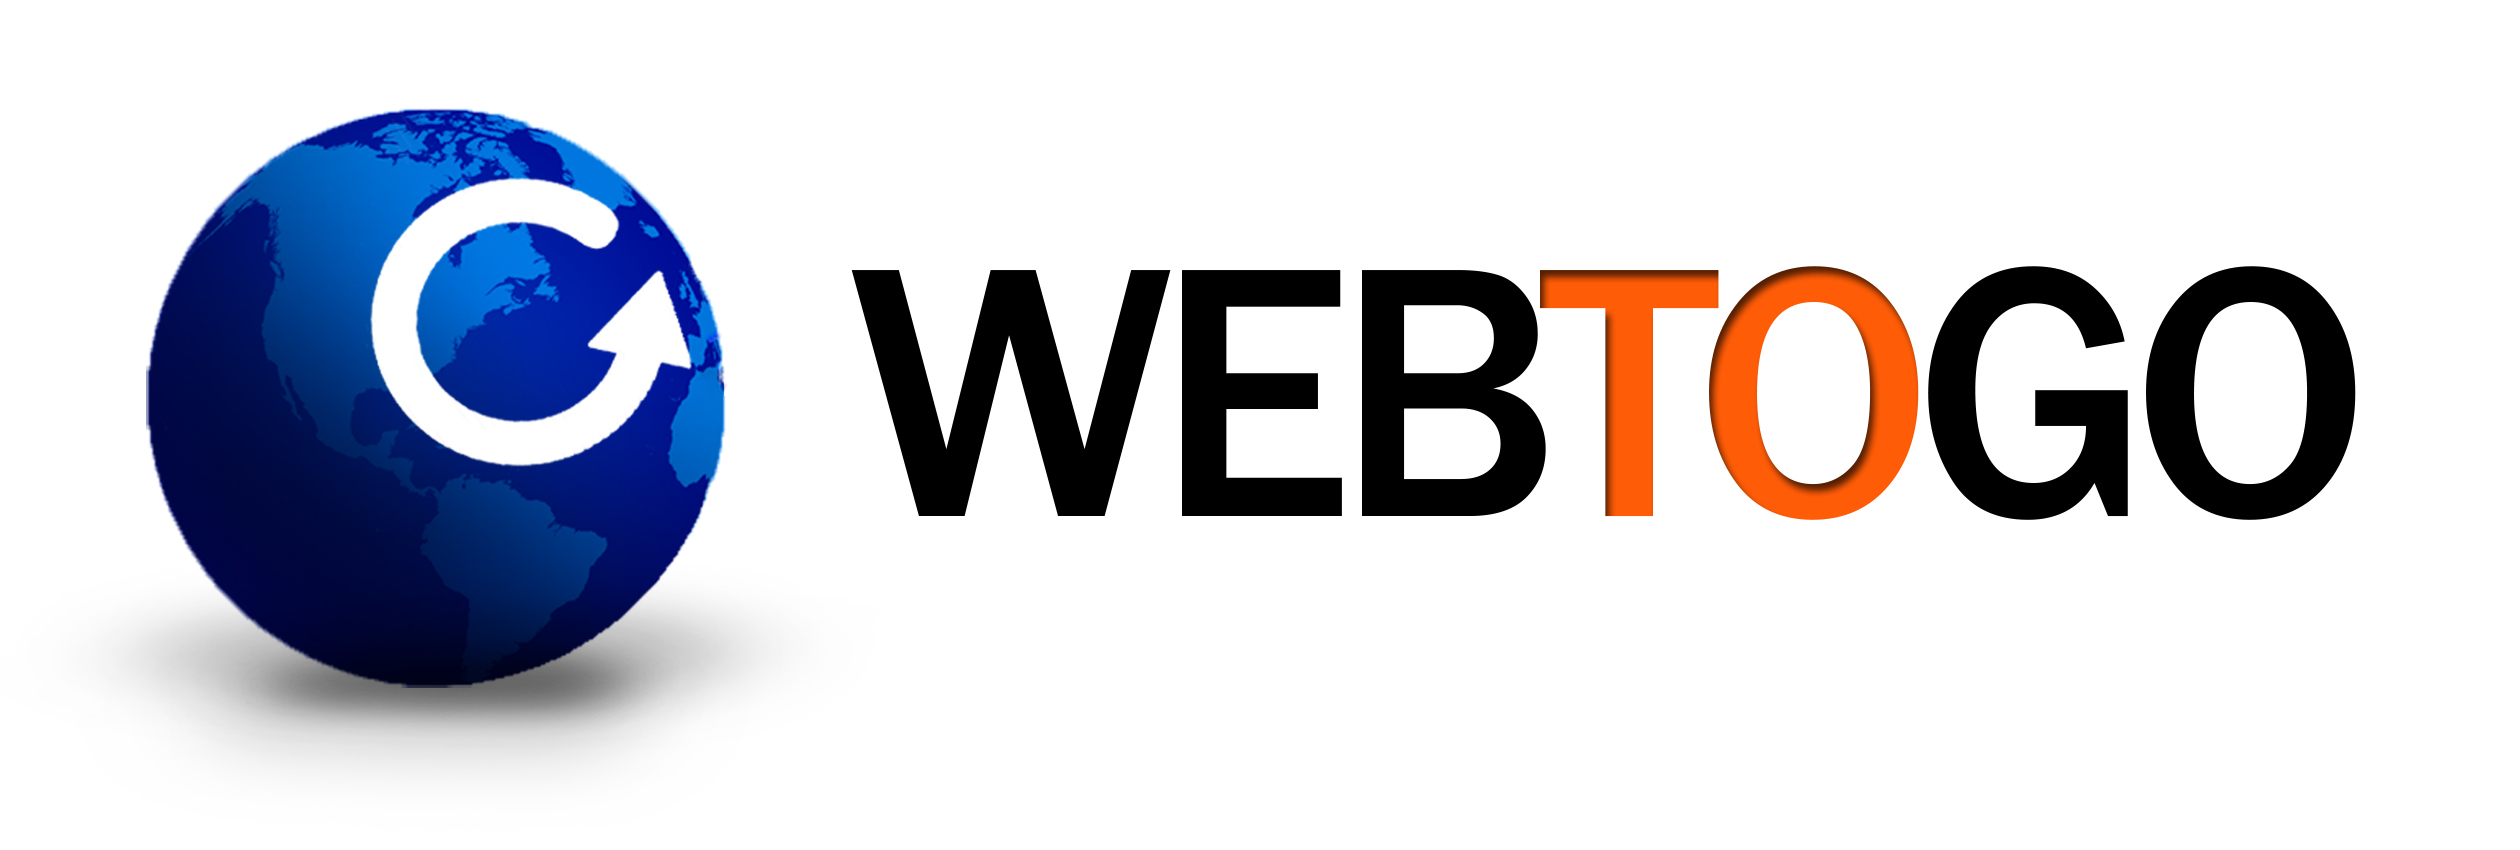 webtogo Website goes live in 10 DAYS